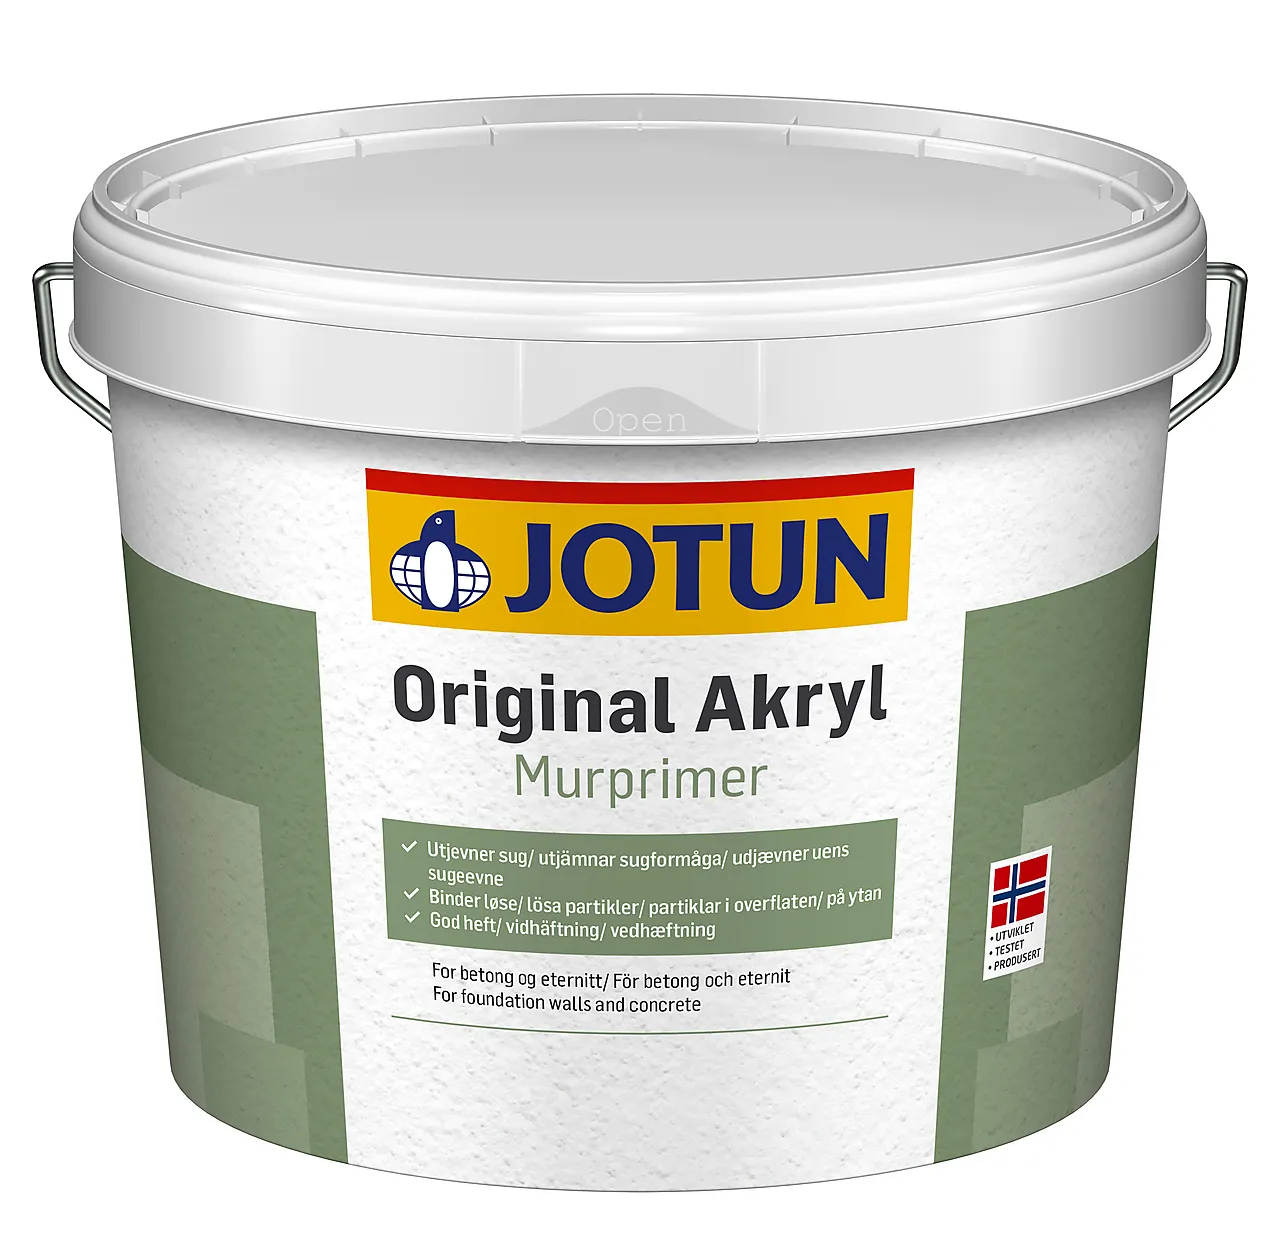 Original Akryl murprimer 3 liter